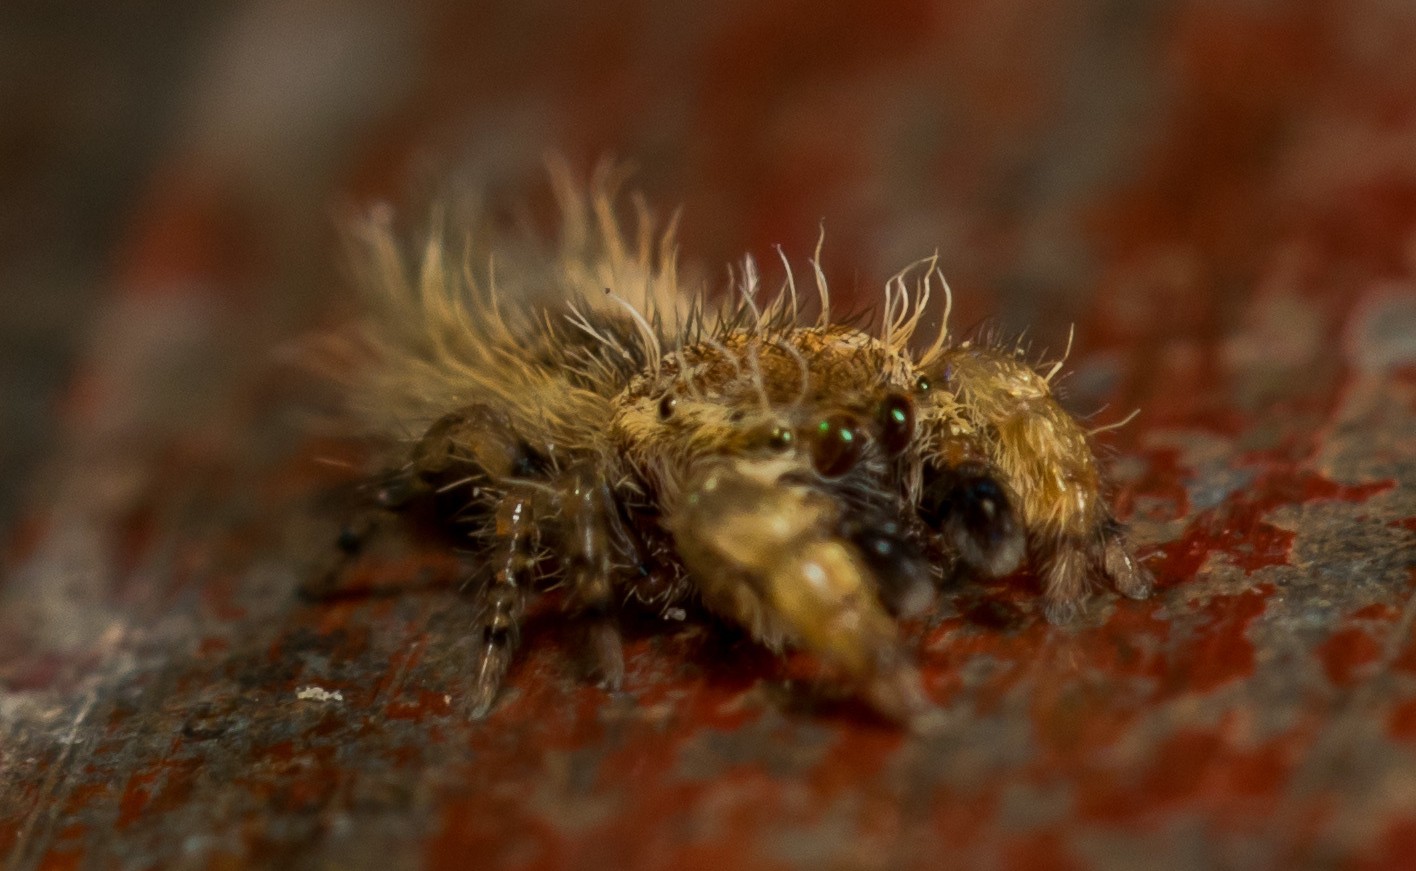 Macro shot of Uroballus carlei, a caterpillar-mimicking jumping spider.